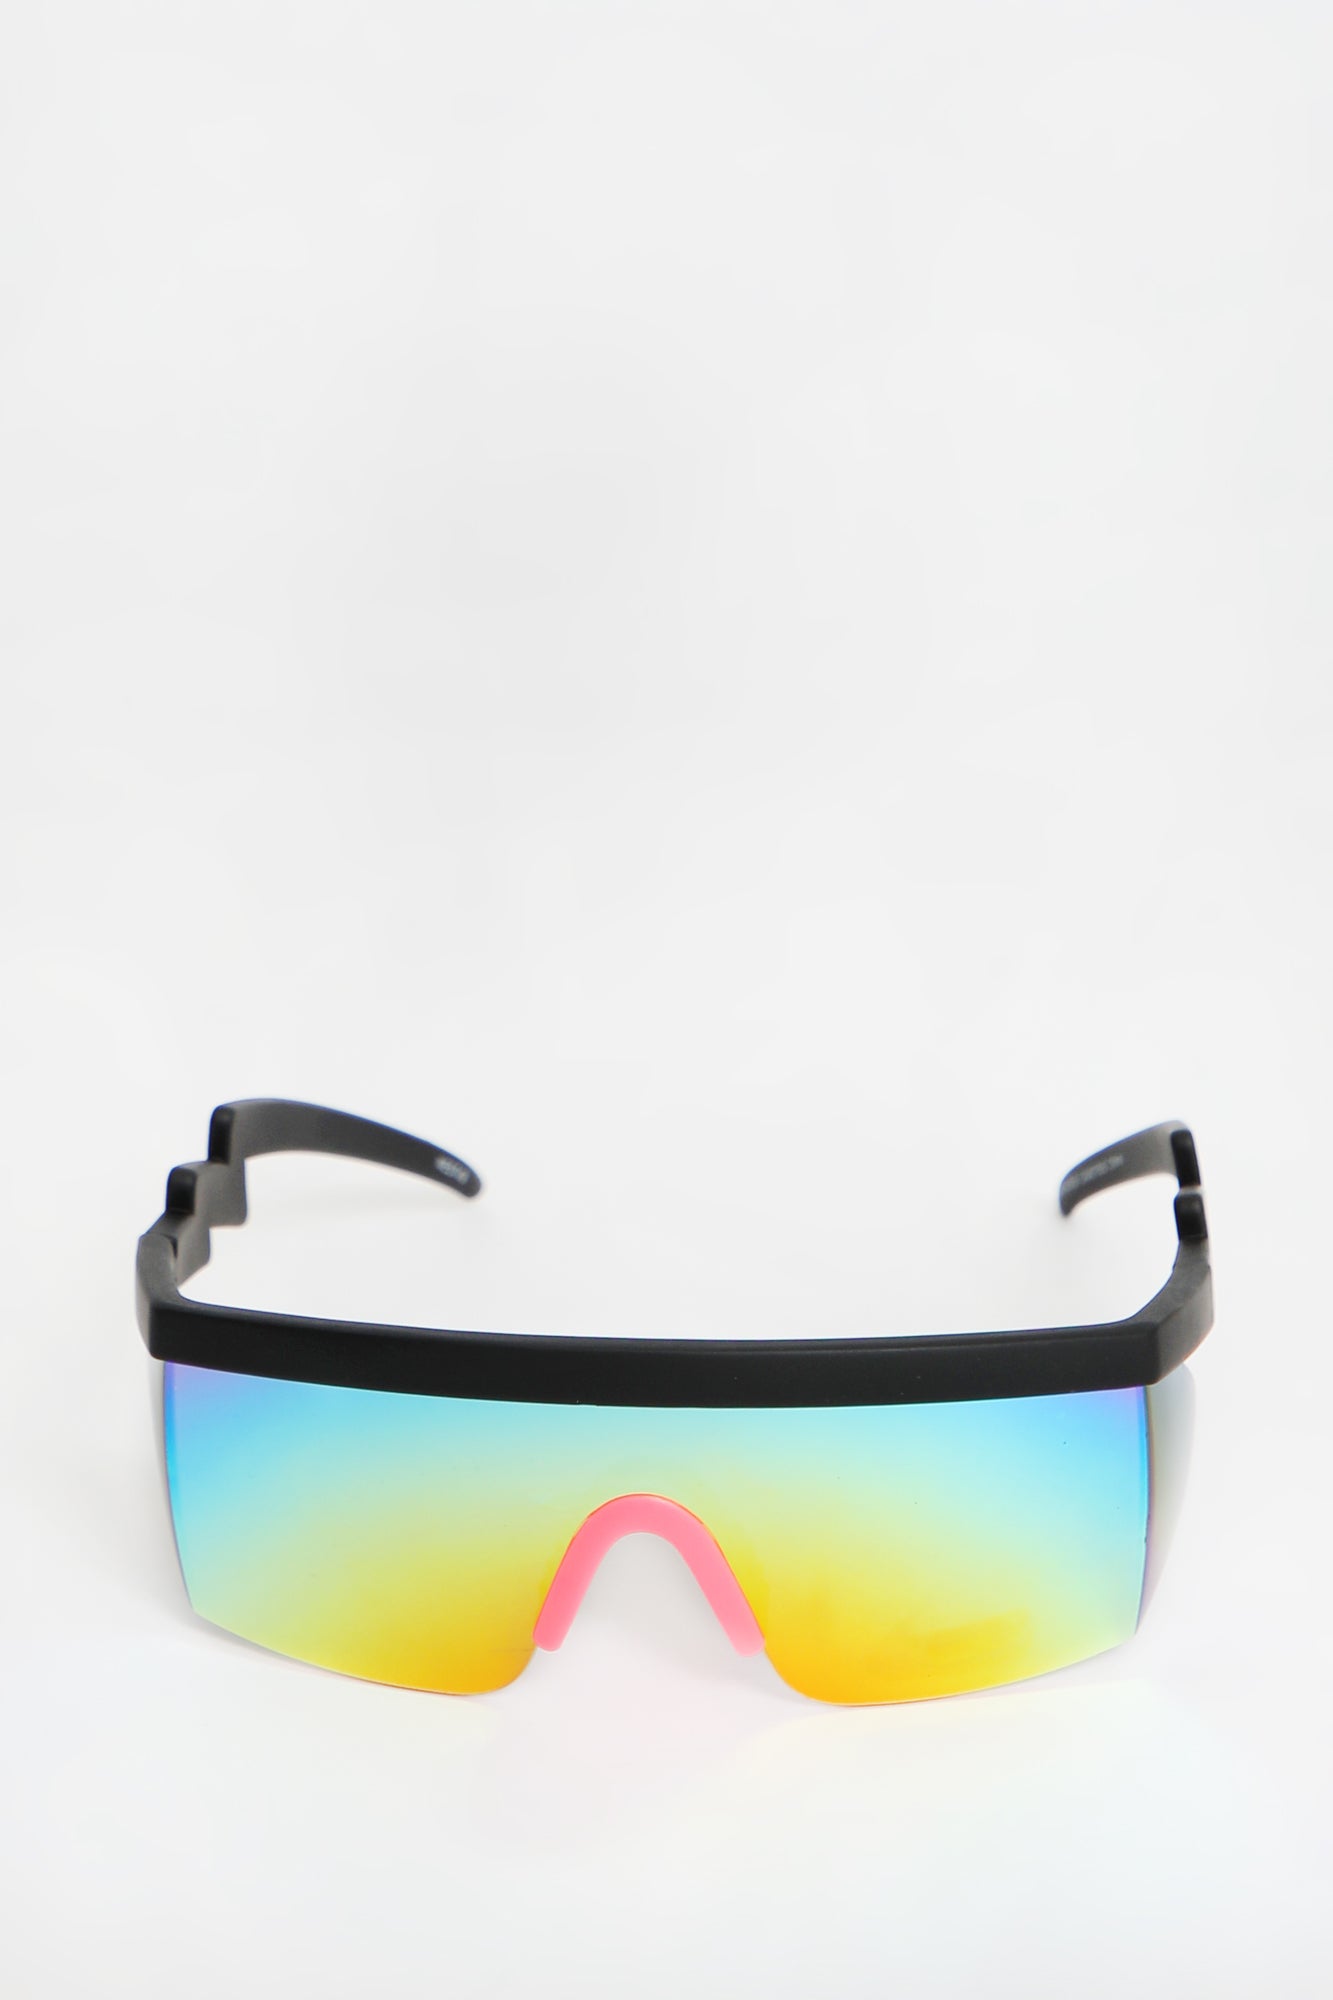 West49 Mirror Shield Sunglasses - Black / O/S